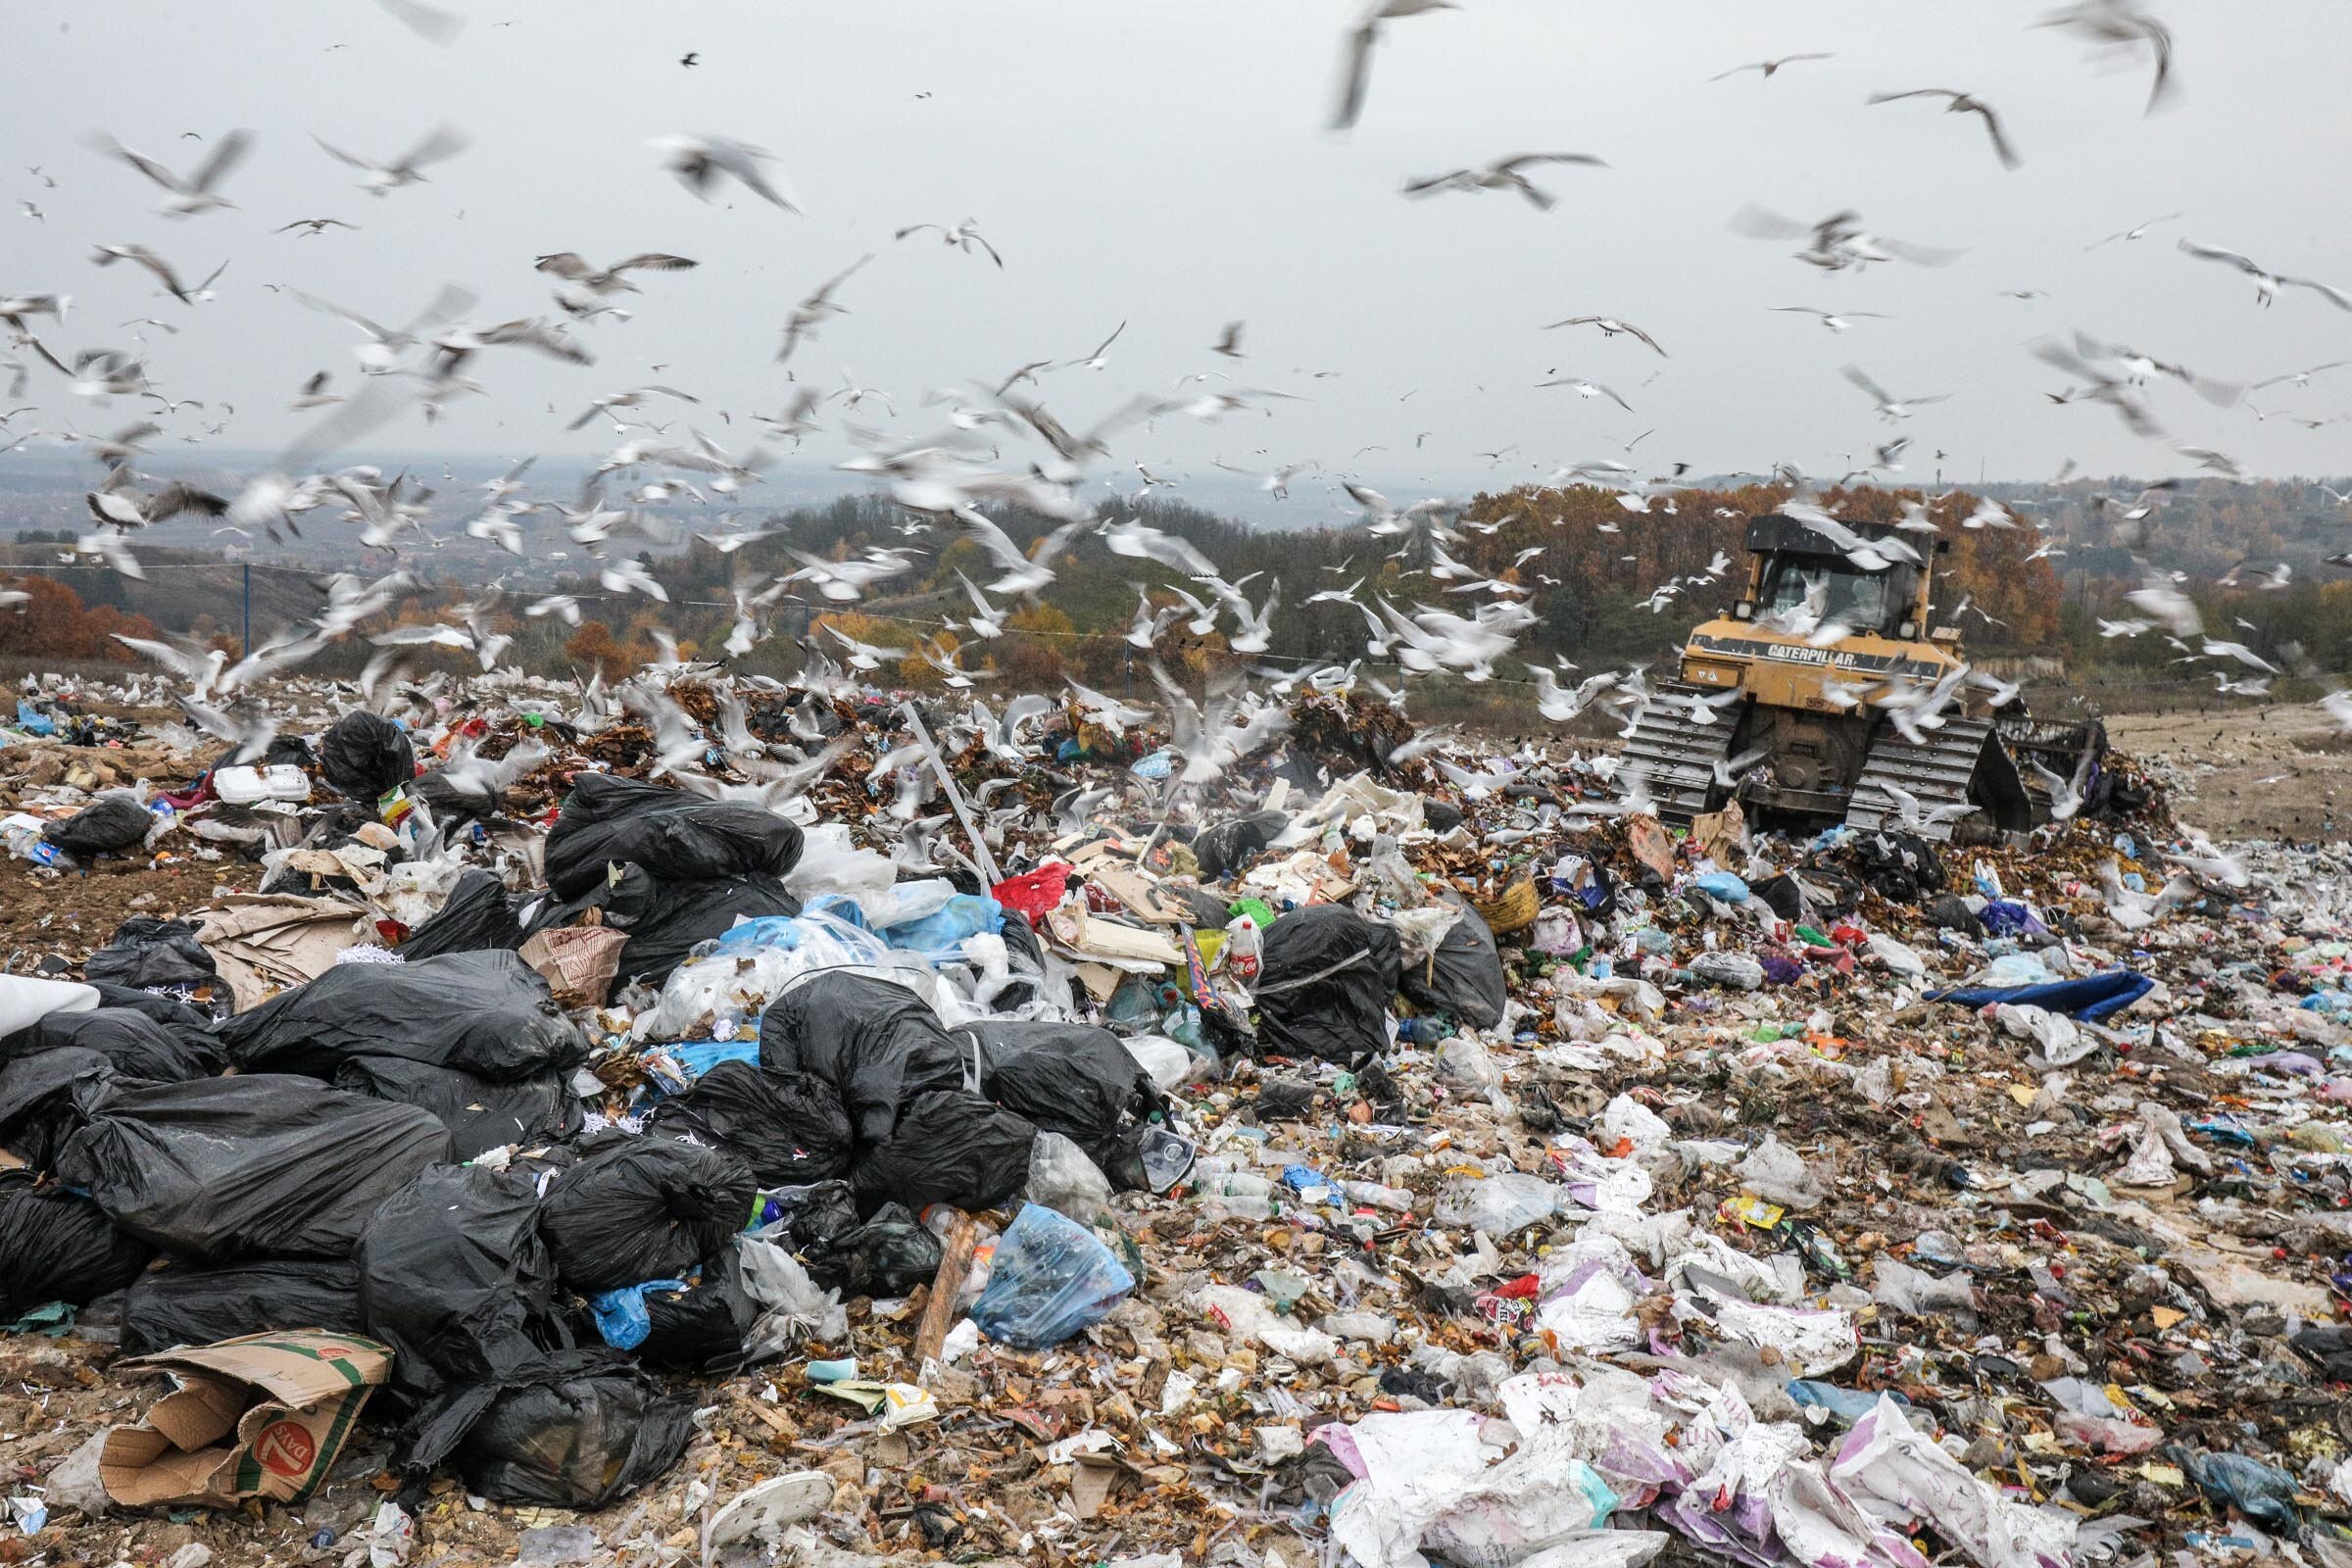 Landfill in Pidhirtsi village, Kyiv Oblast, on Nov. 12, 2020.